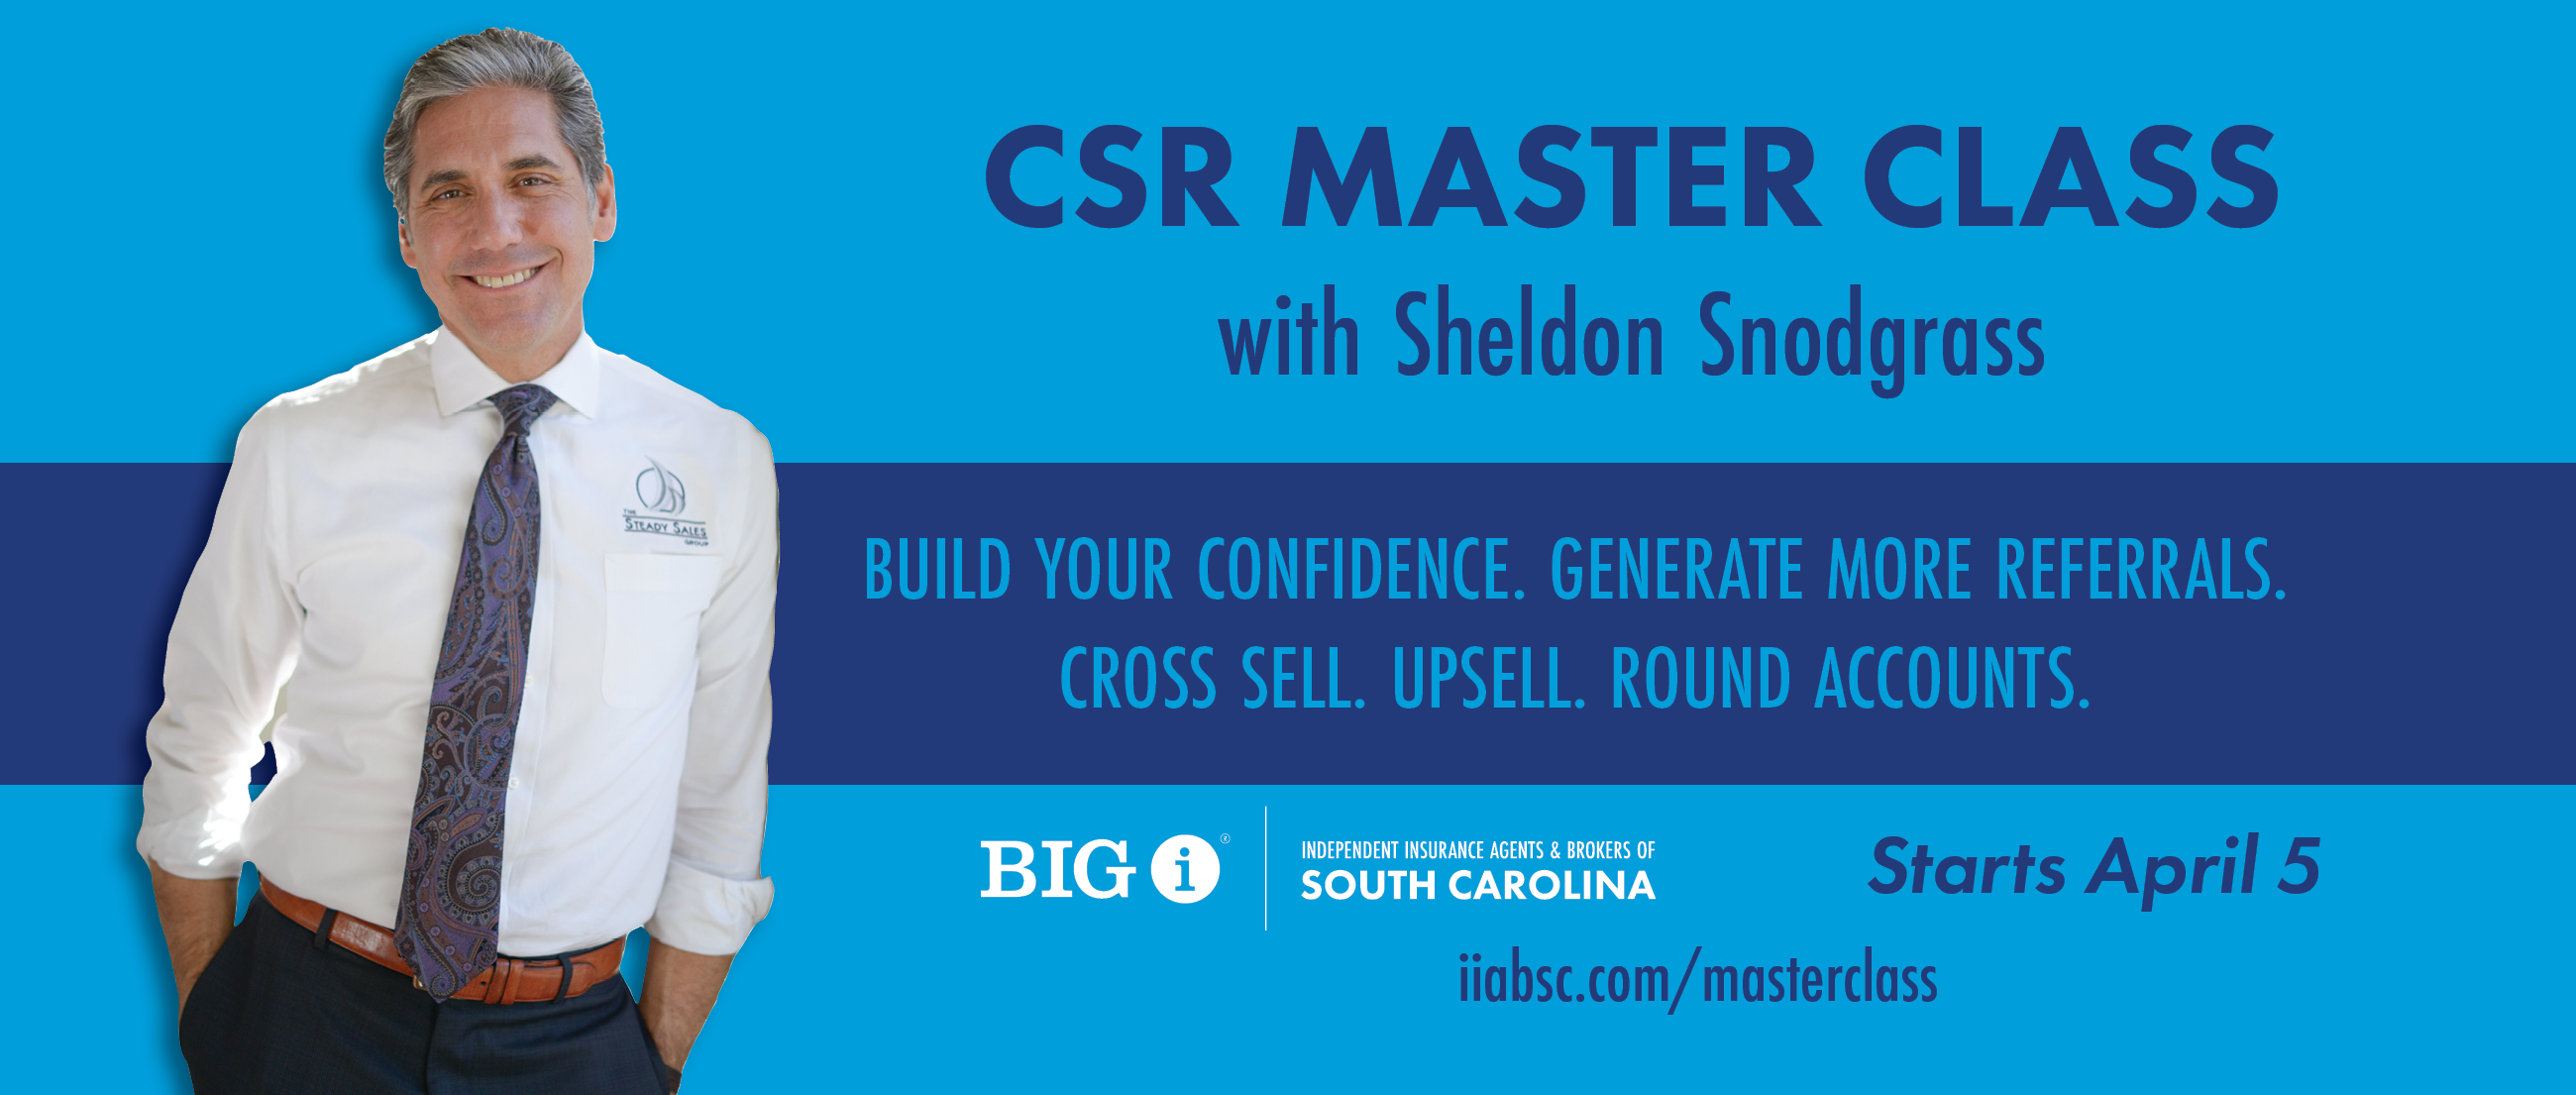 Build Your Confidence - Generate More Referrals - CSR Masterclass starts April 5